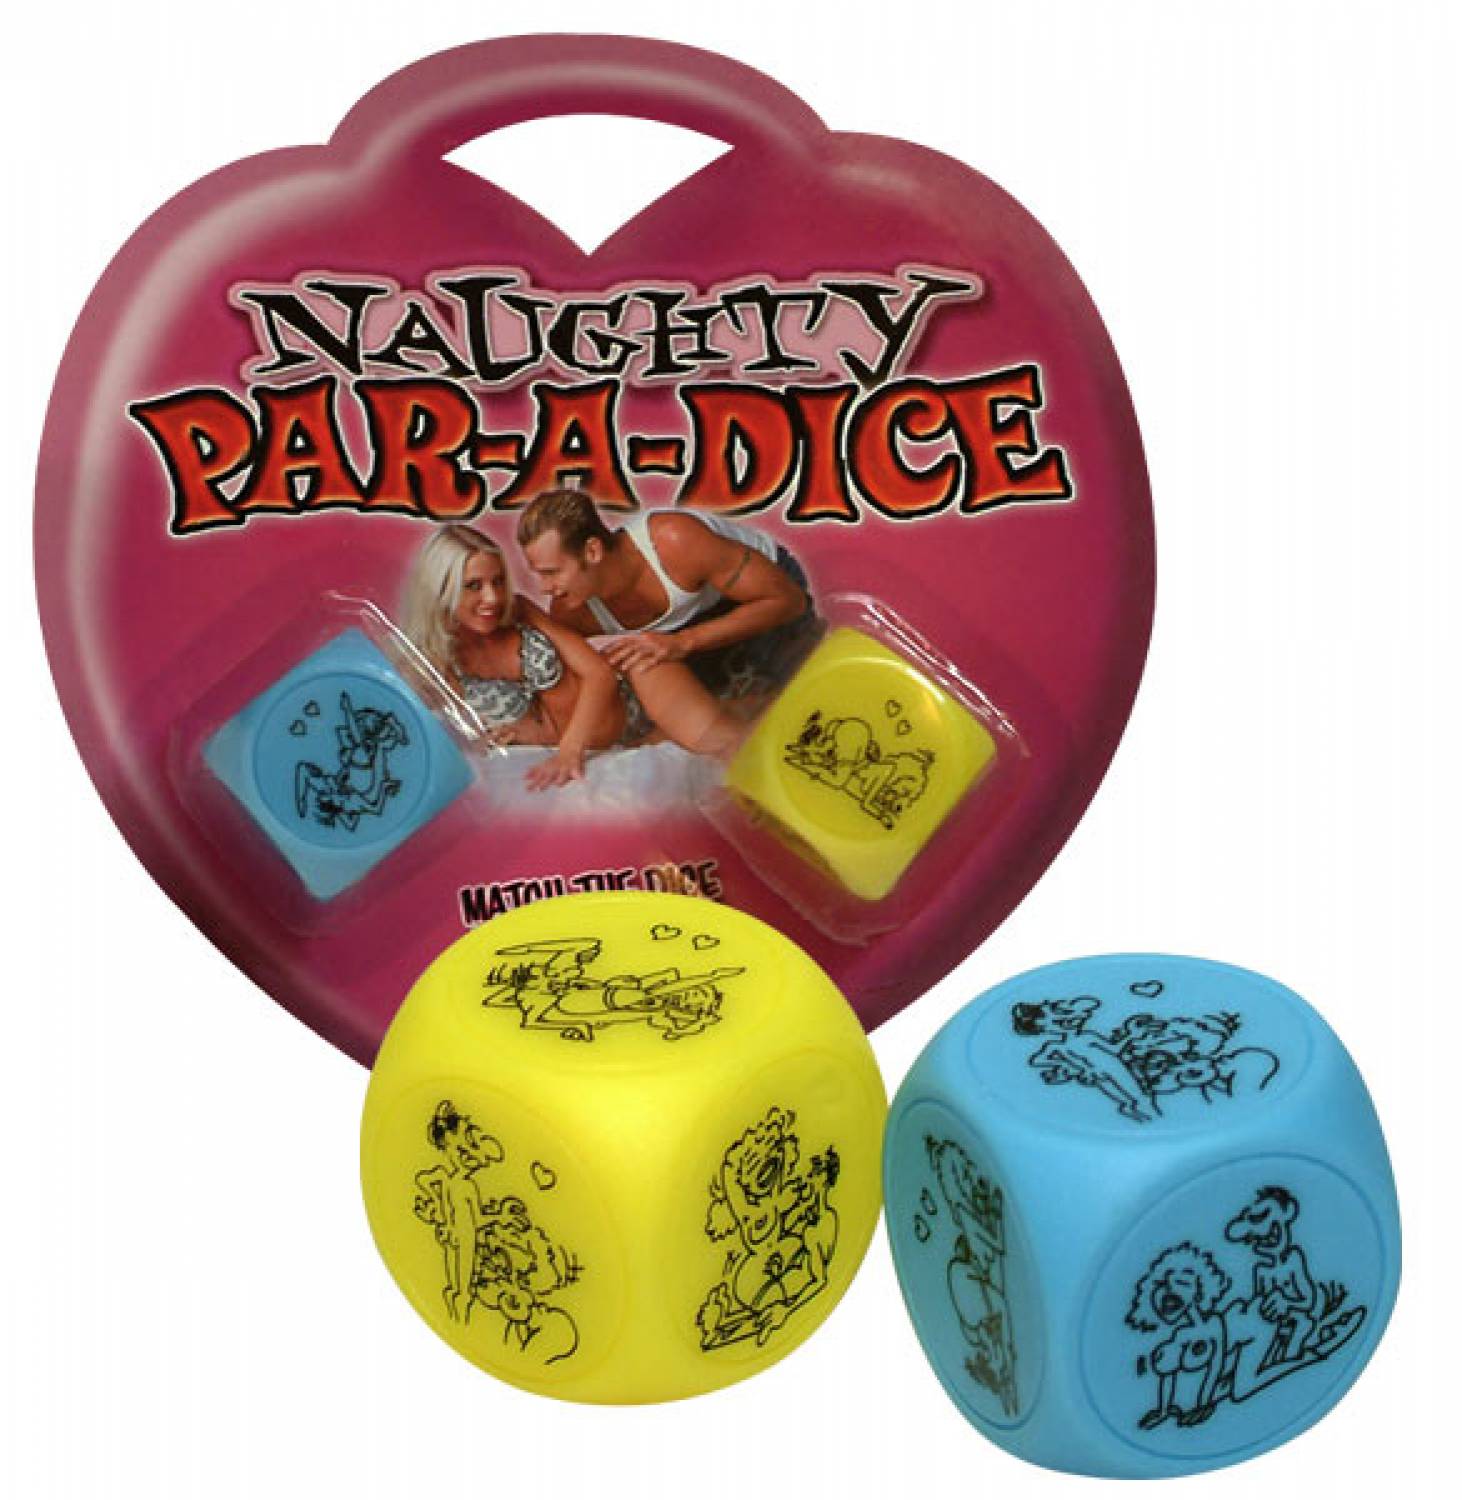 Erotic Entertainment Love Toys Naughty par-a-dice